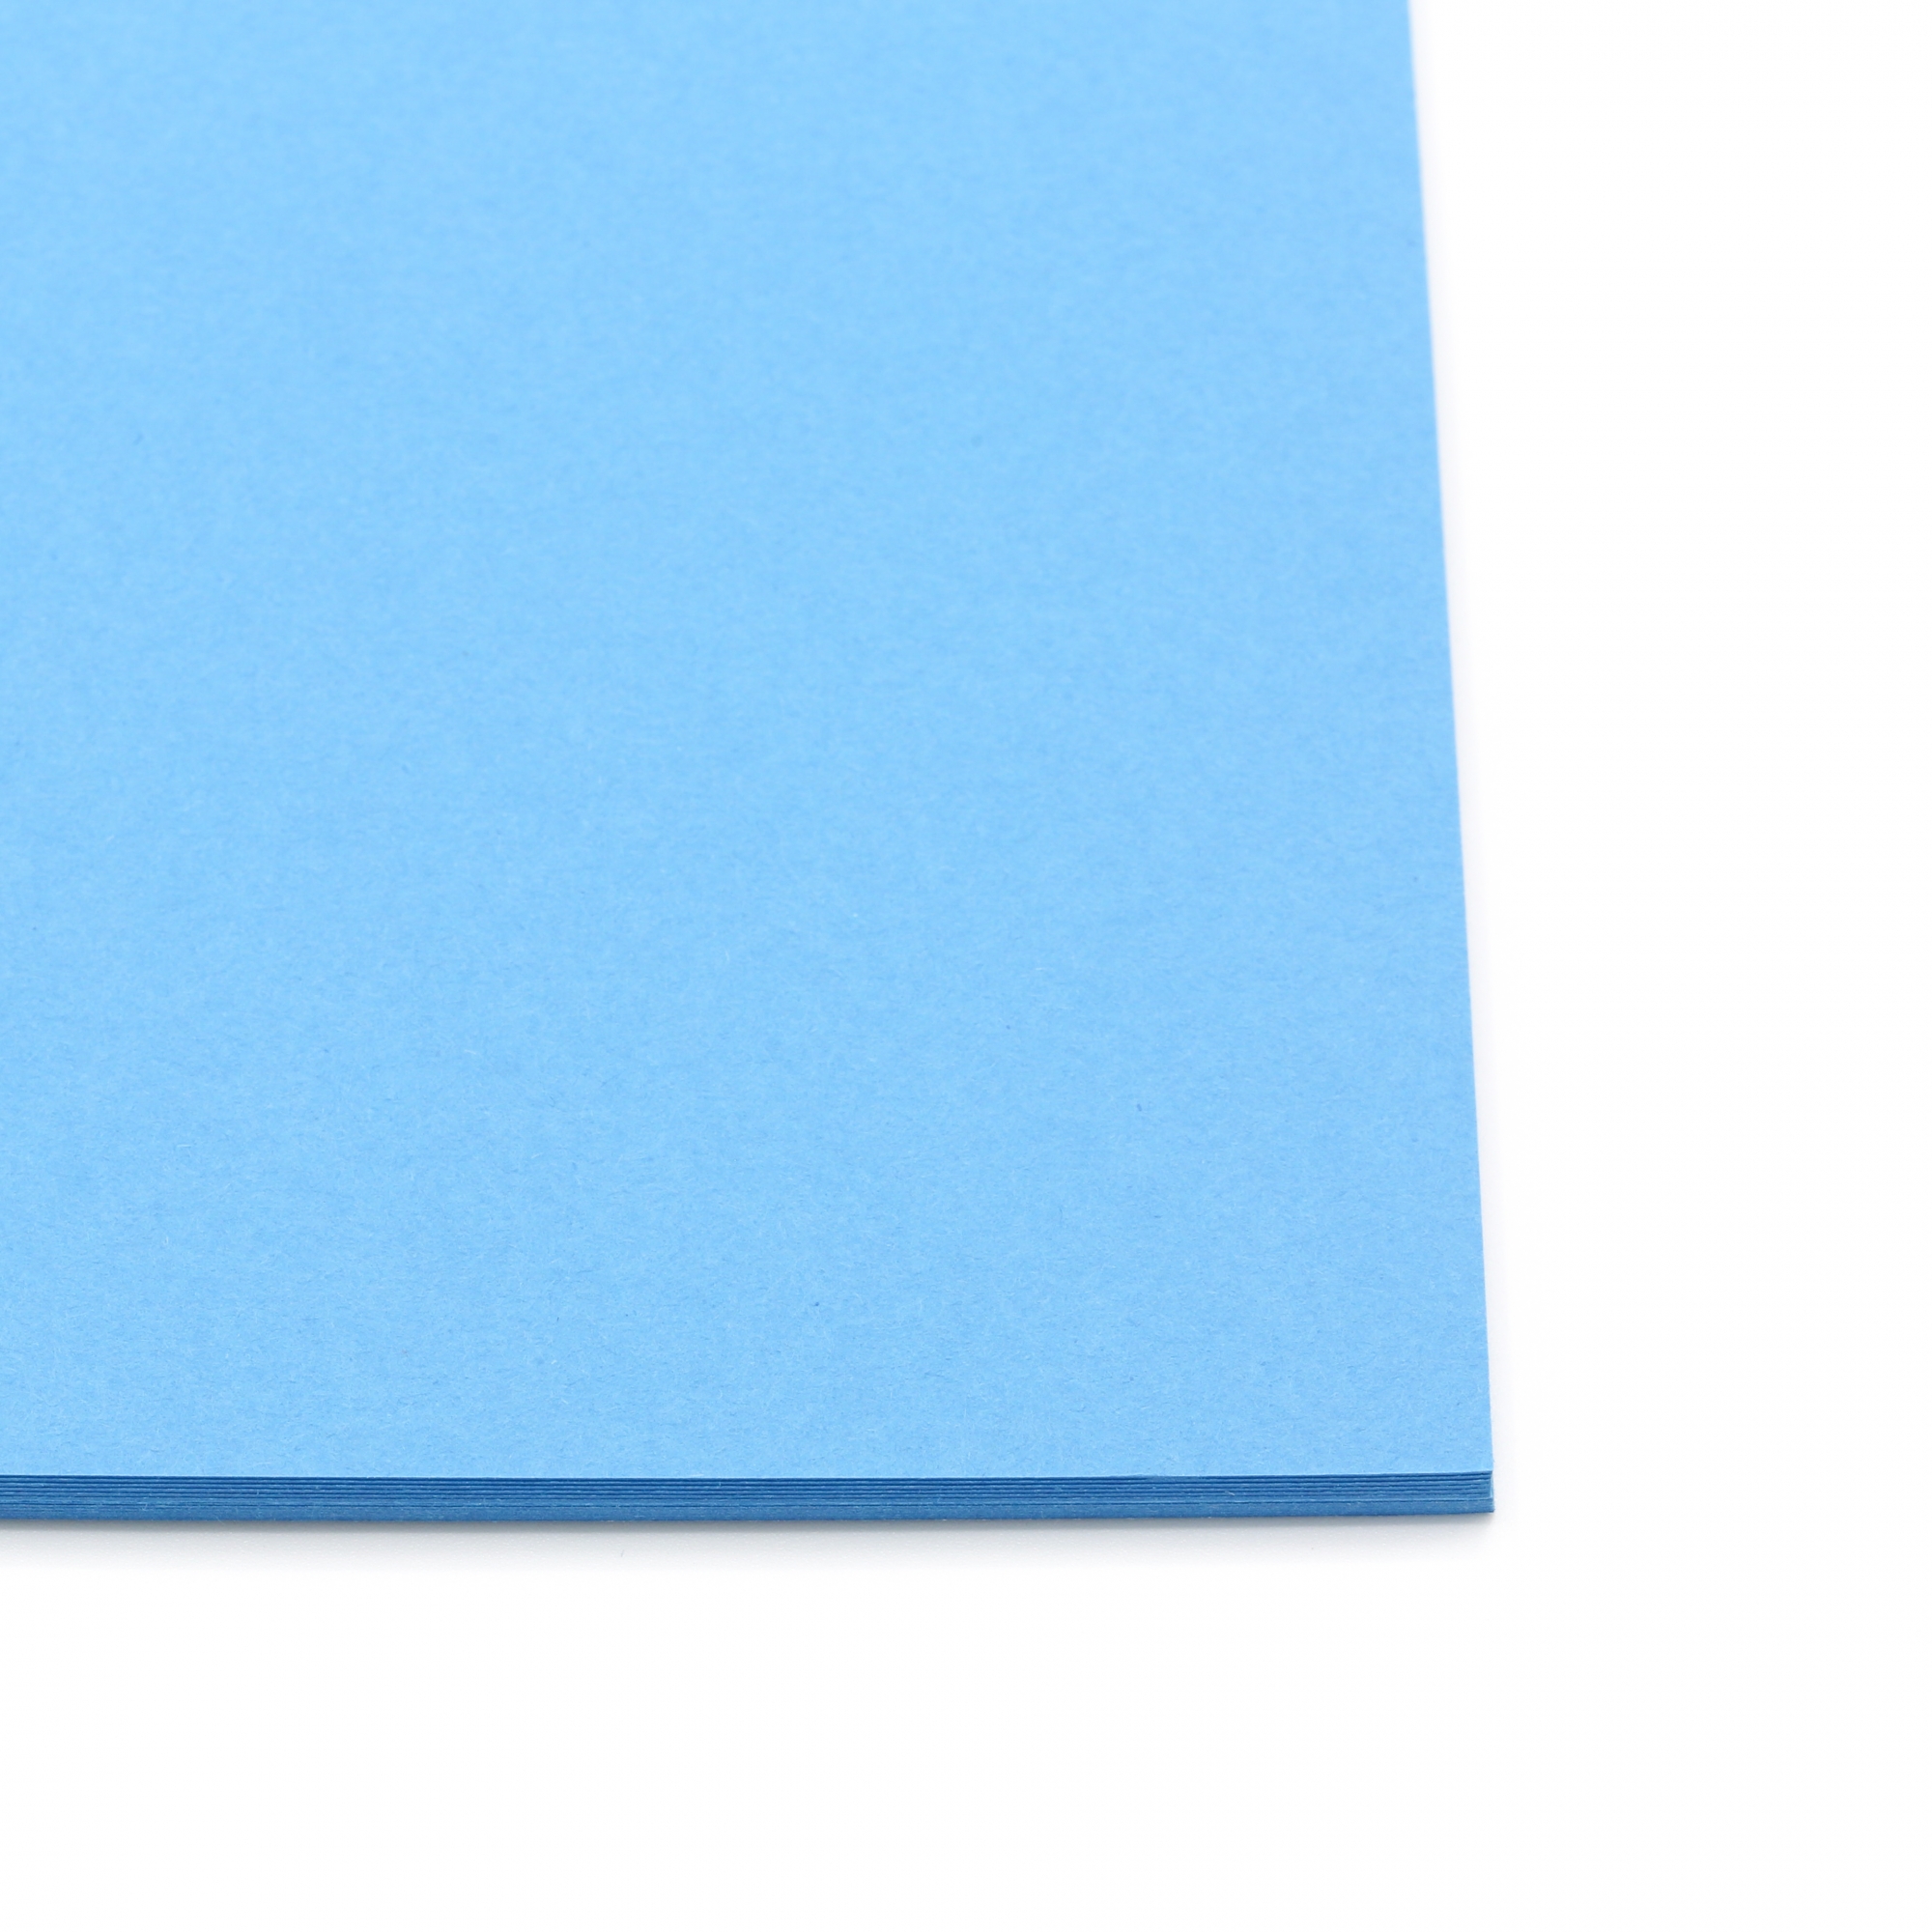  Light Blue Paper